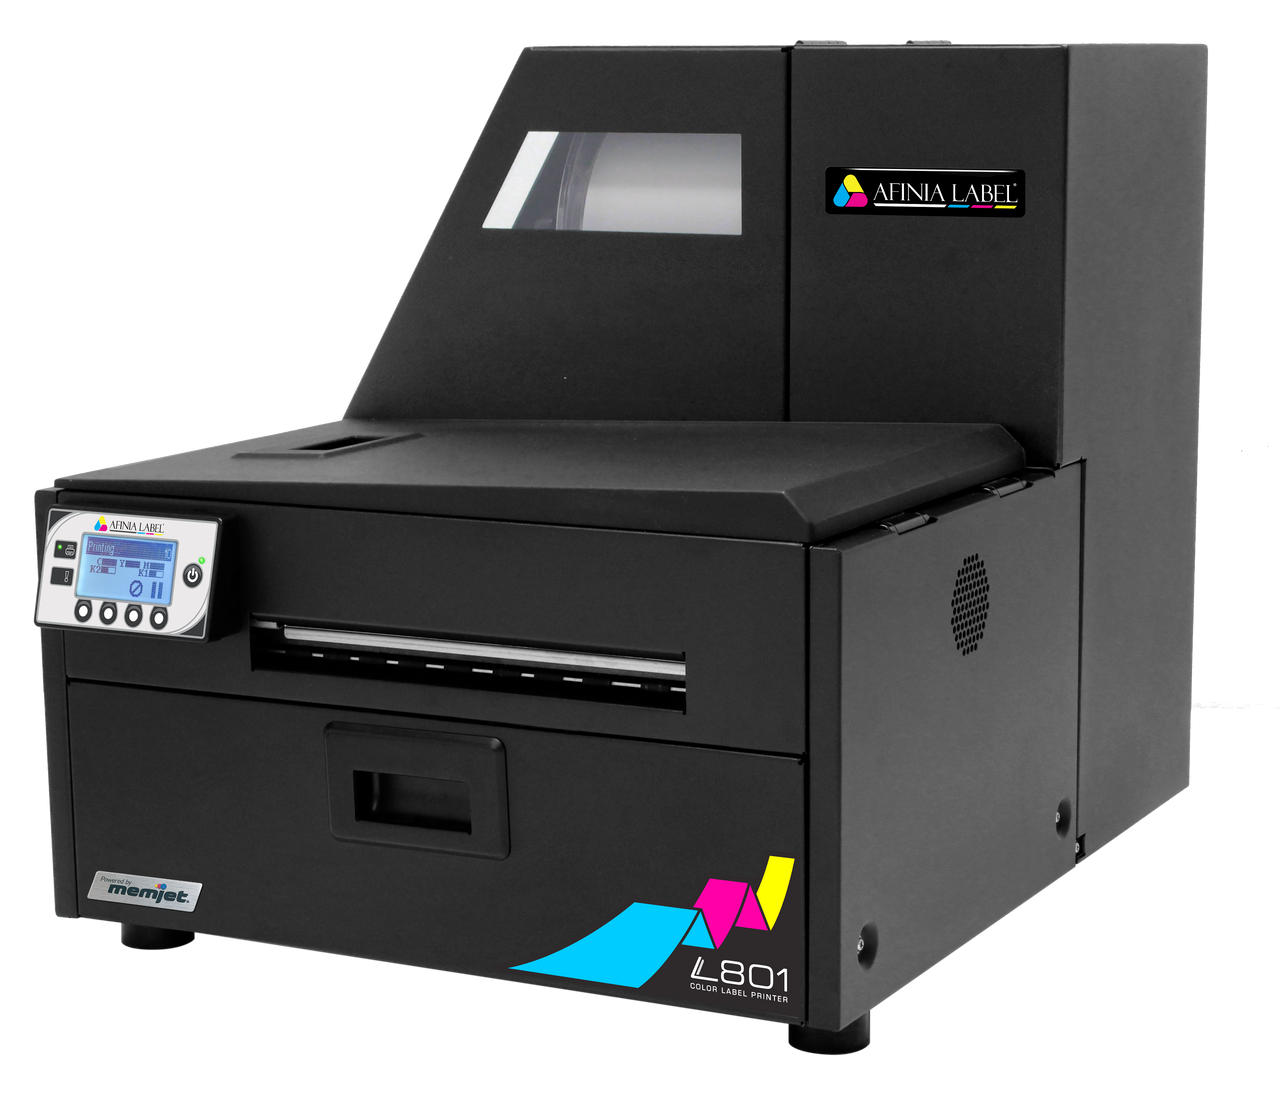 ClariSafe Color Label Printer